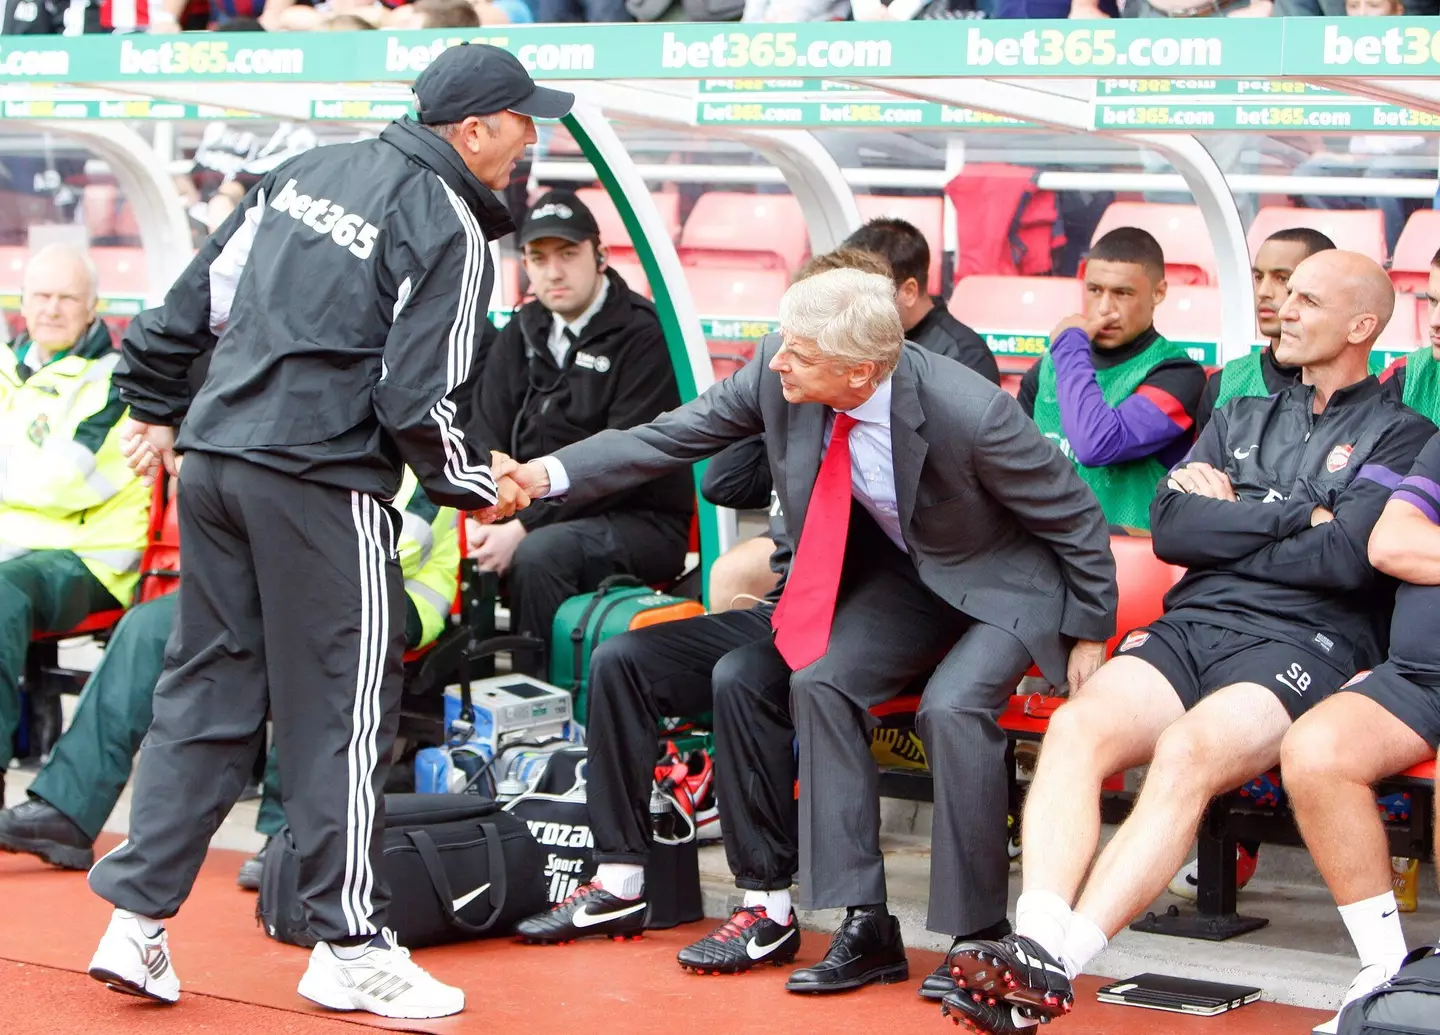 Tony Pulis and Arsene Wenger had many fierce battles in the Premier League. (Image